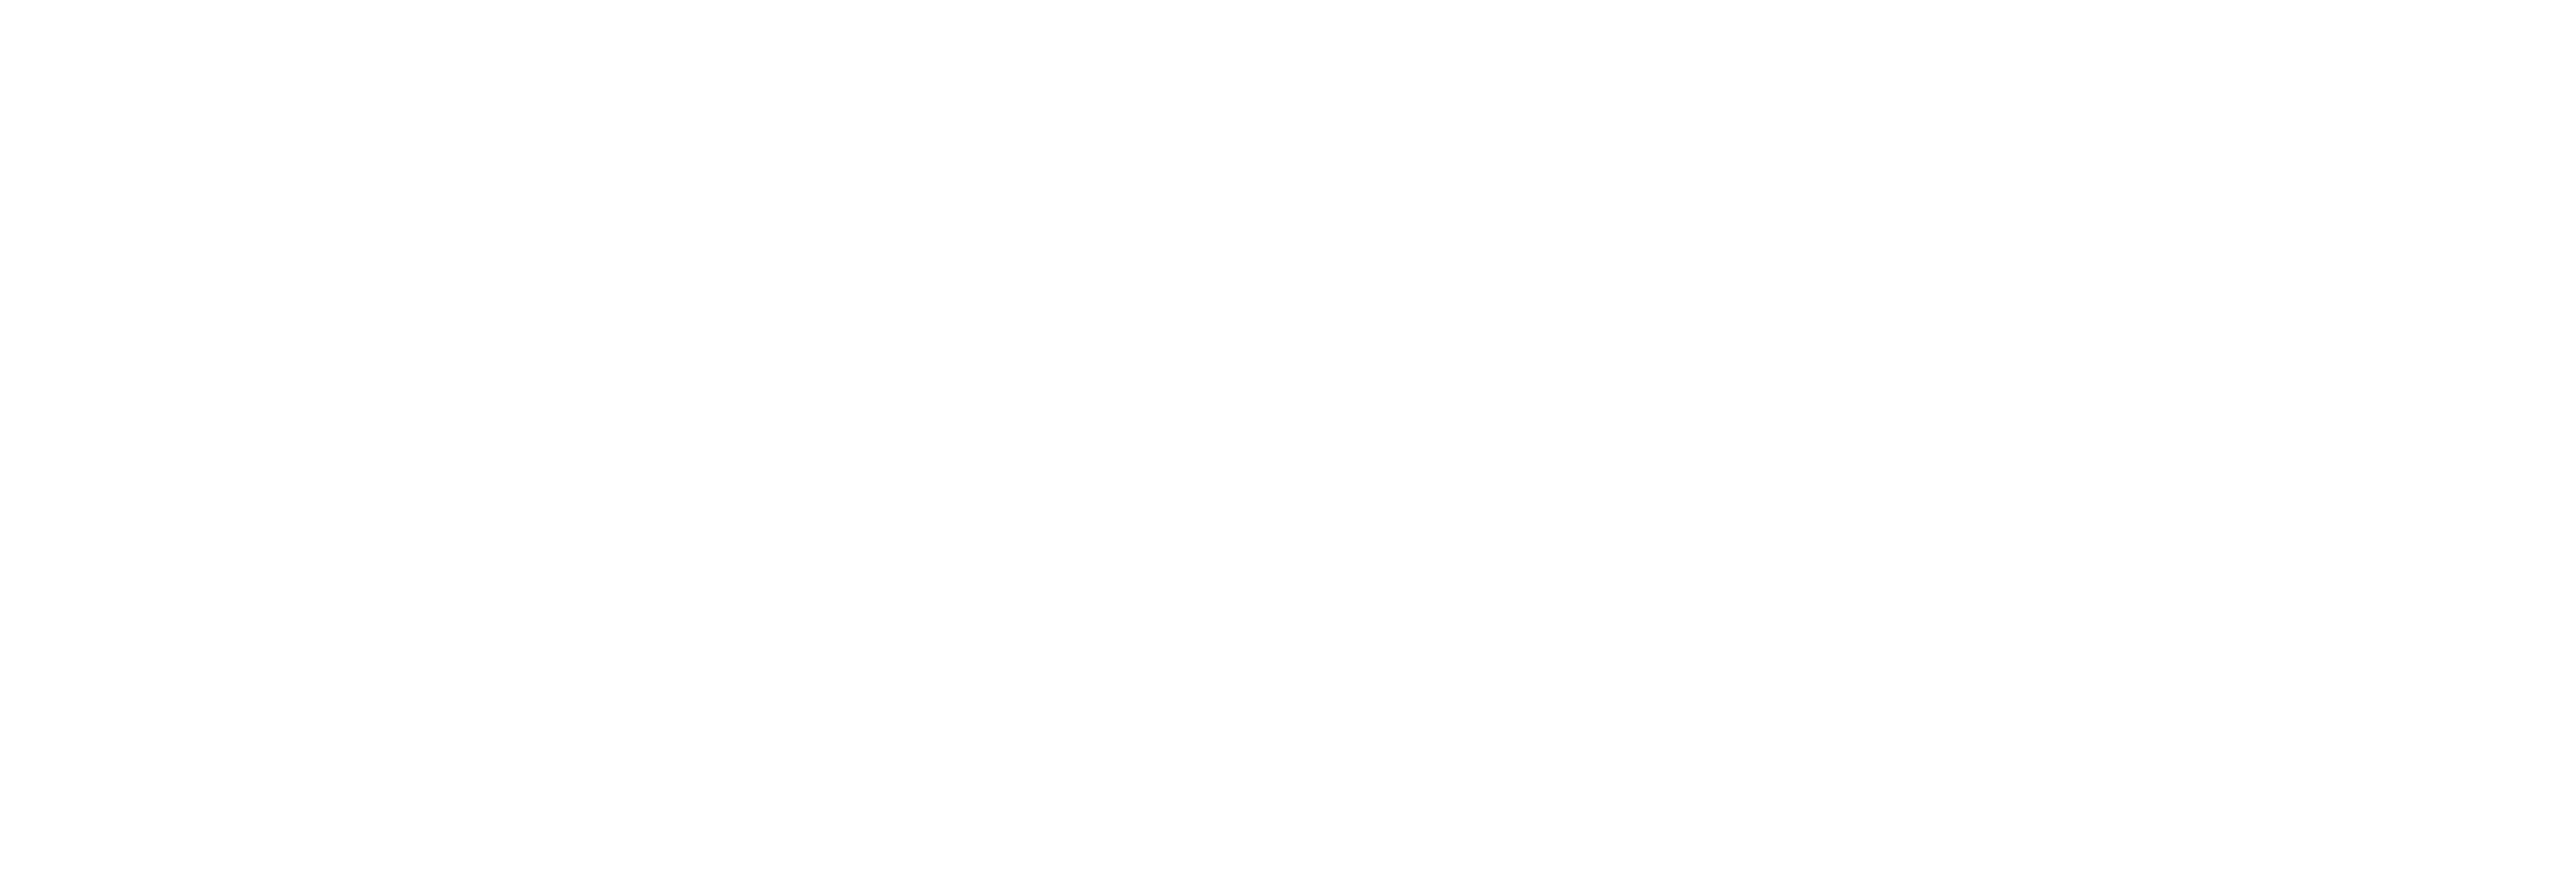 Minimal Frame Projects Logo